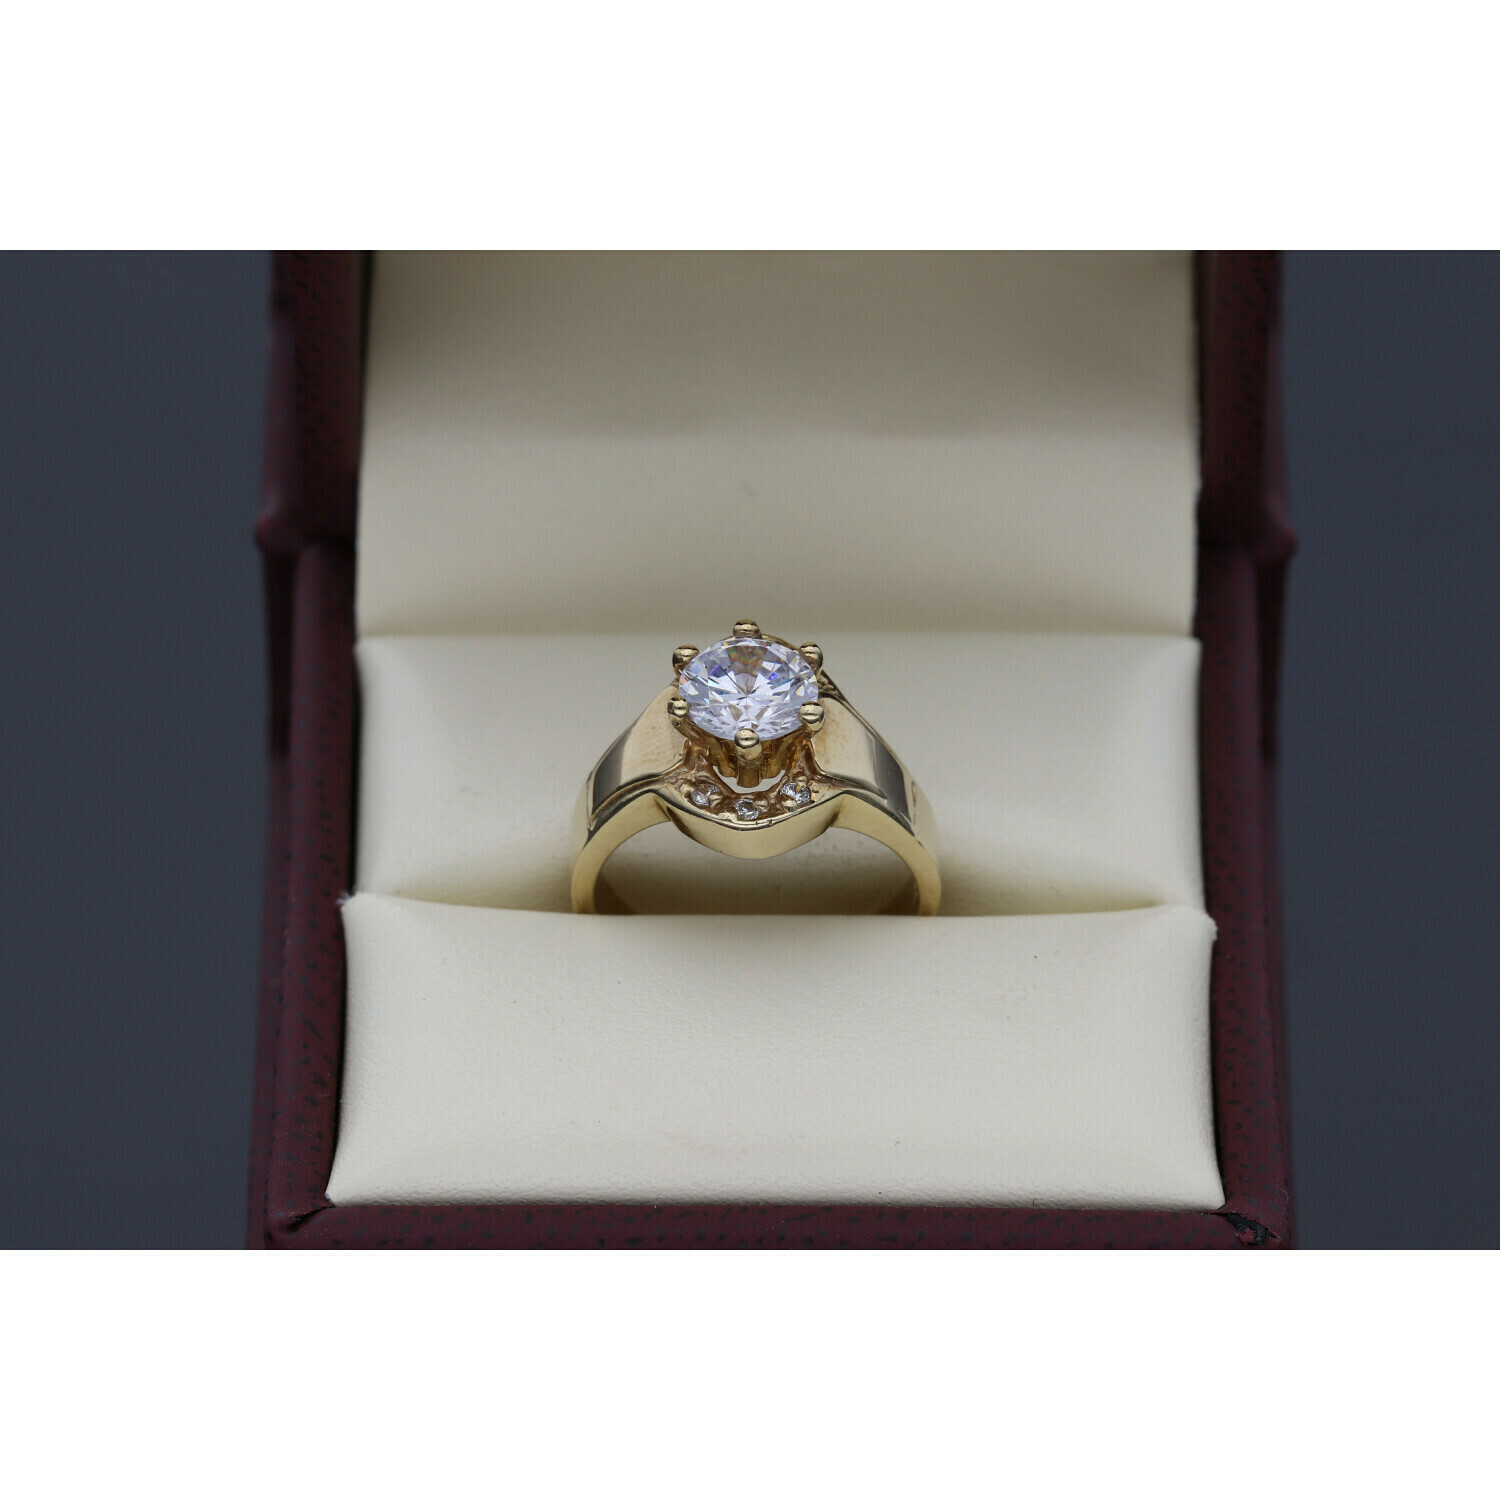 10 Karat Gold & Zirconium Princess Engagement Ring